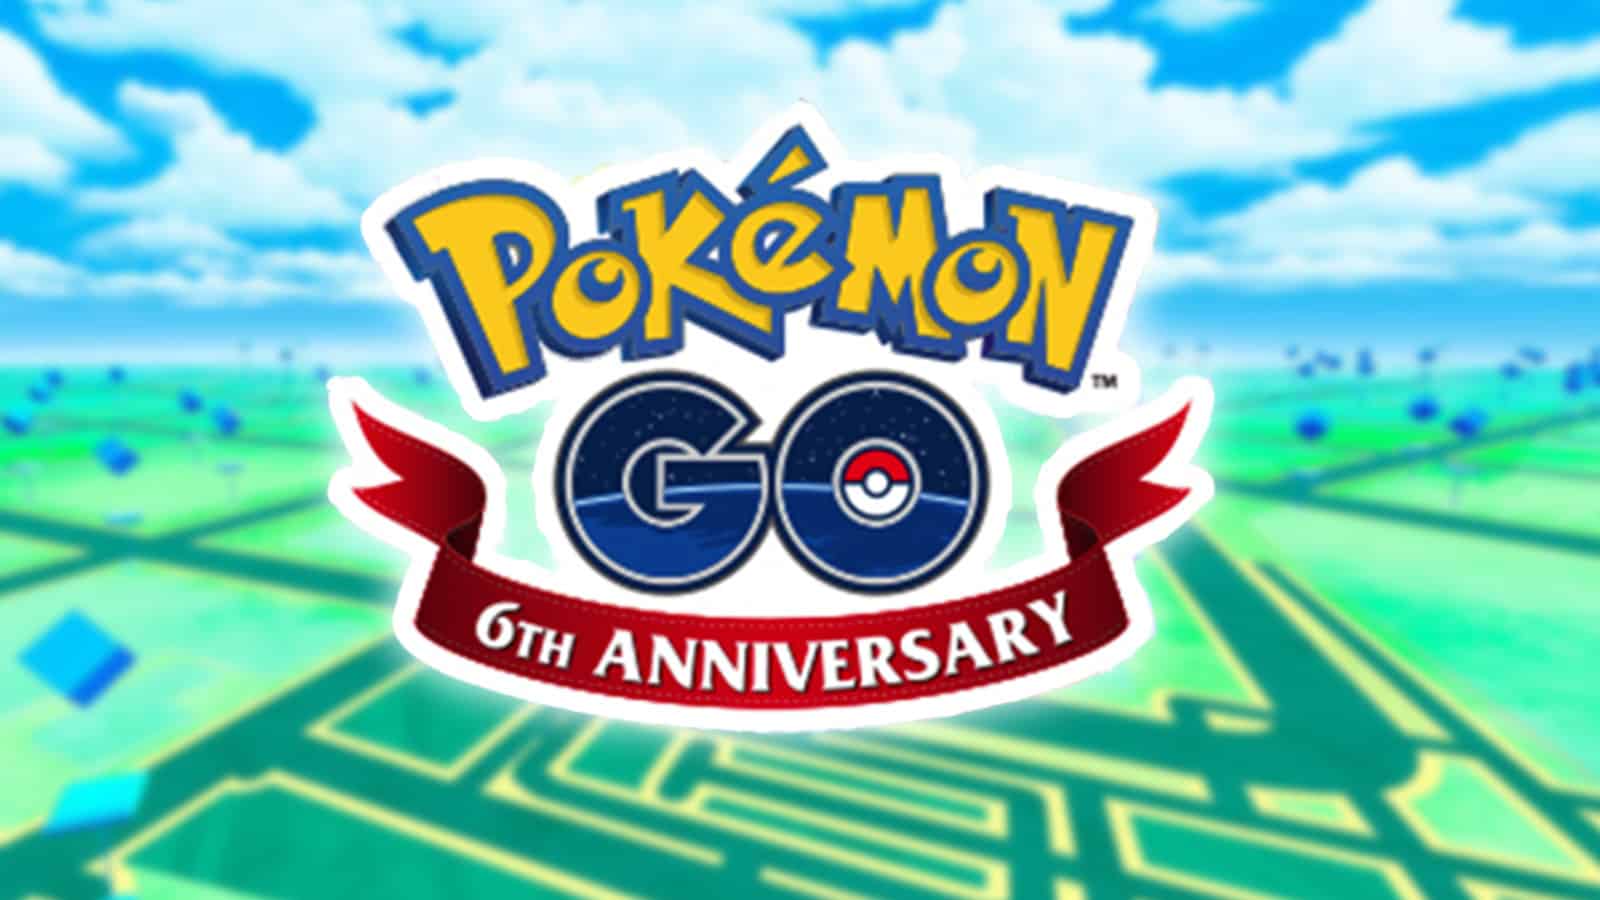 PokemonGo6th anniversary event image